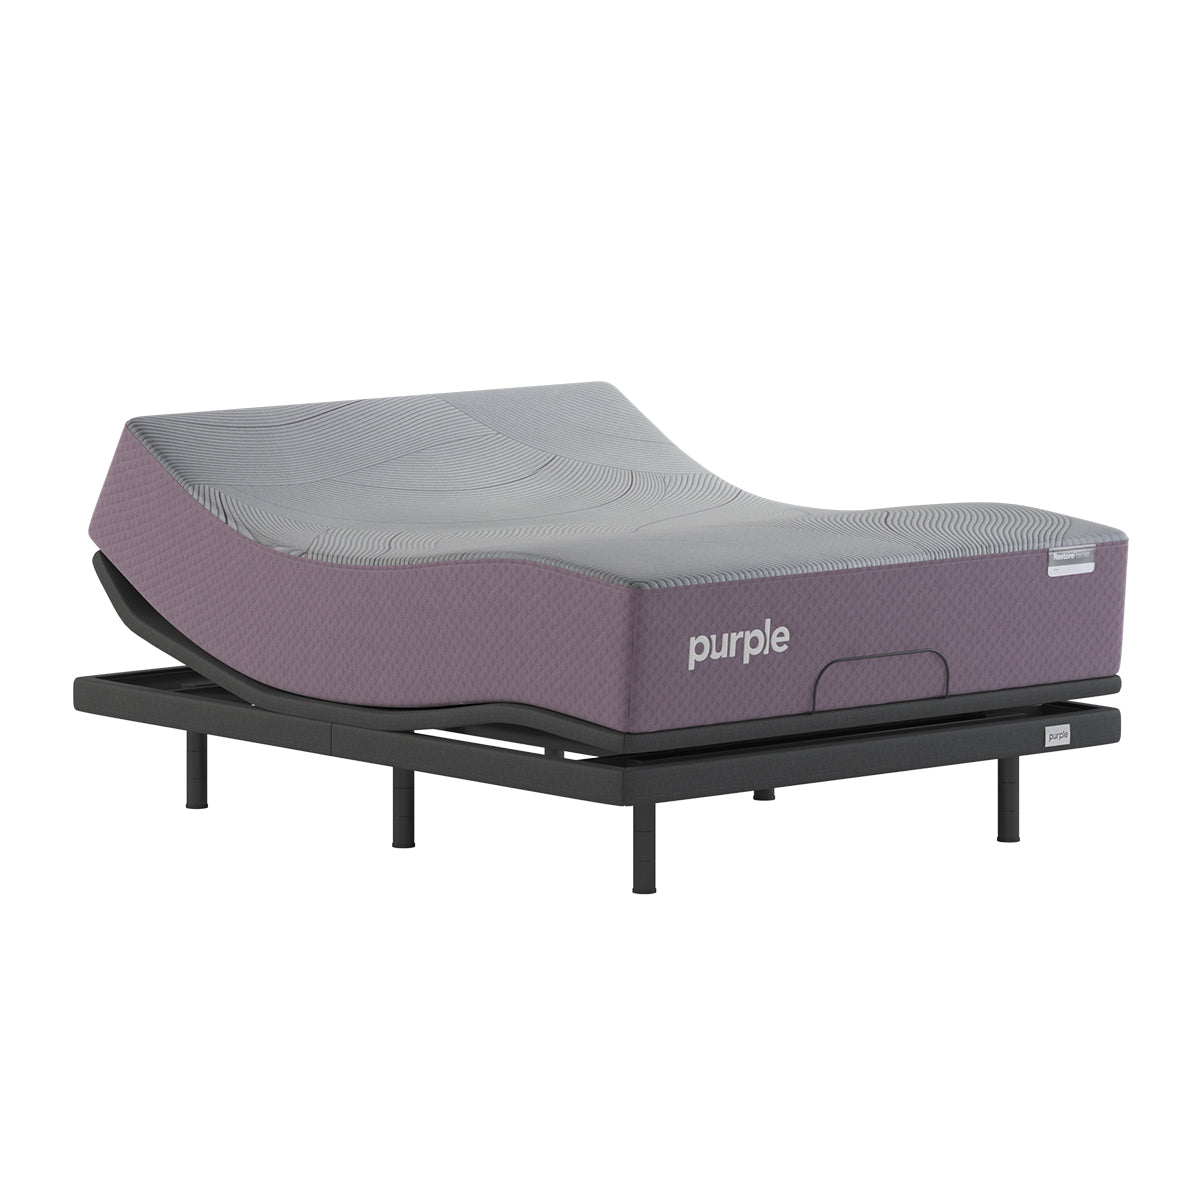 Purple Restore Premier Soft Mattress on adjustable base